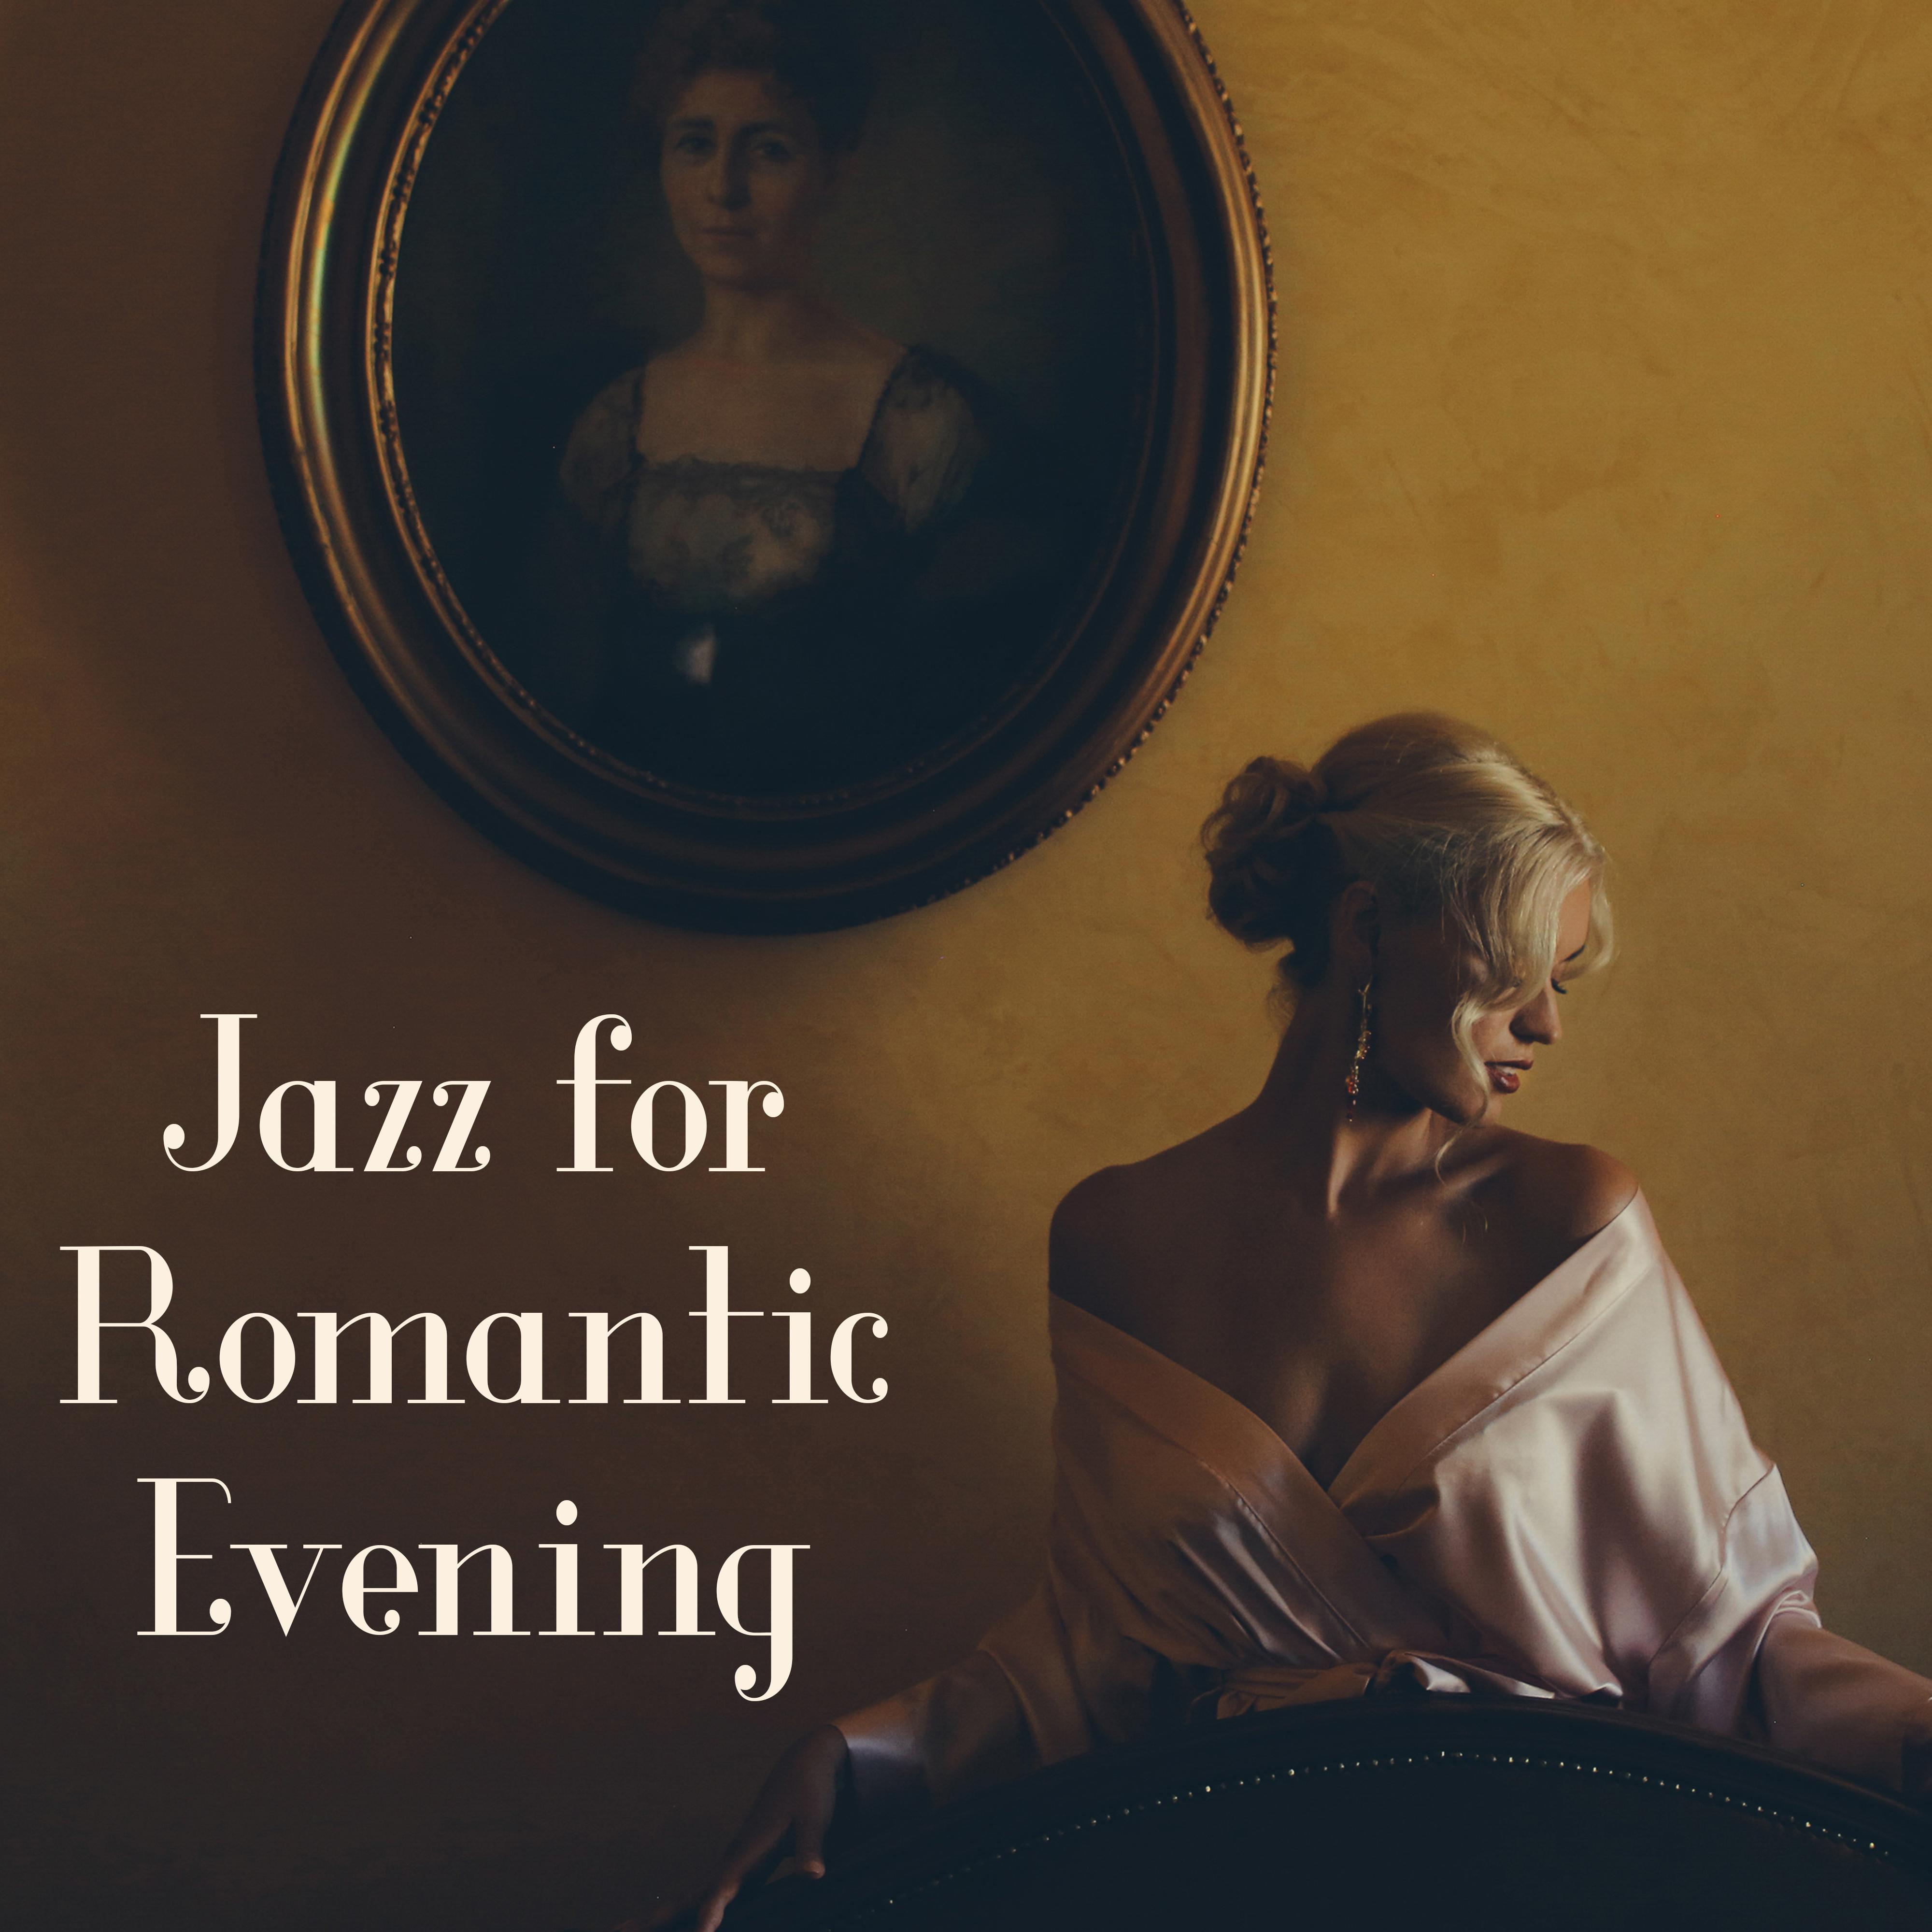 Jazz for Romantic Evening